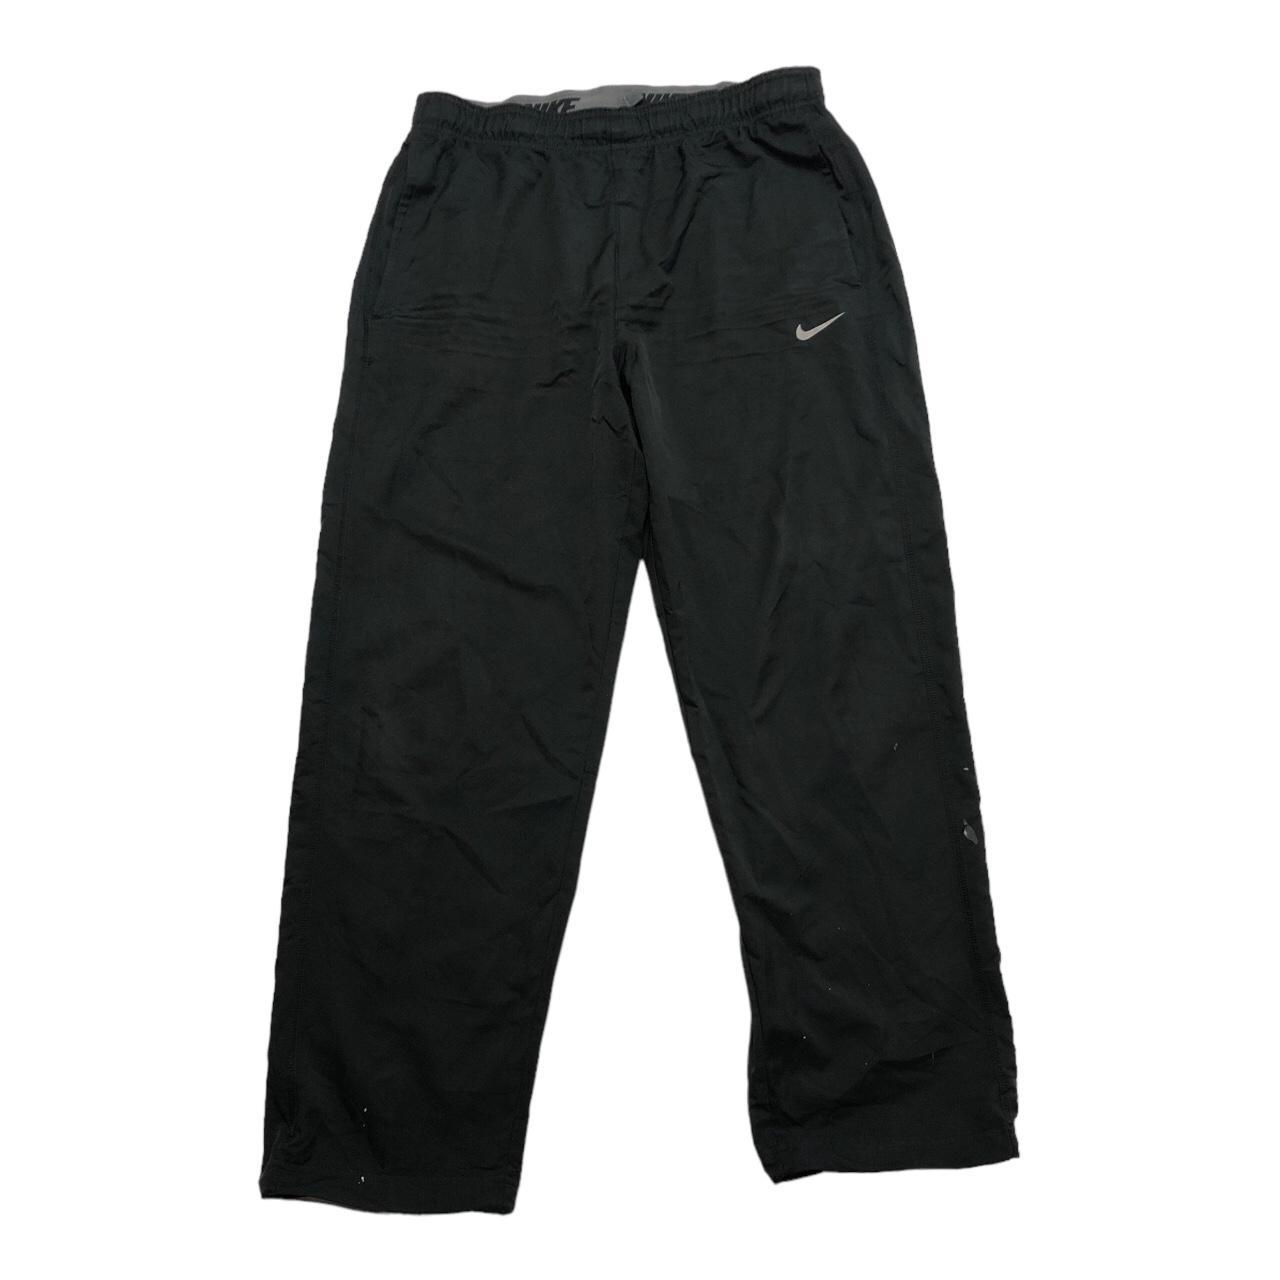 Nike joggers in black. Measurements, waist 34” x... - Depop